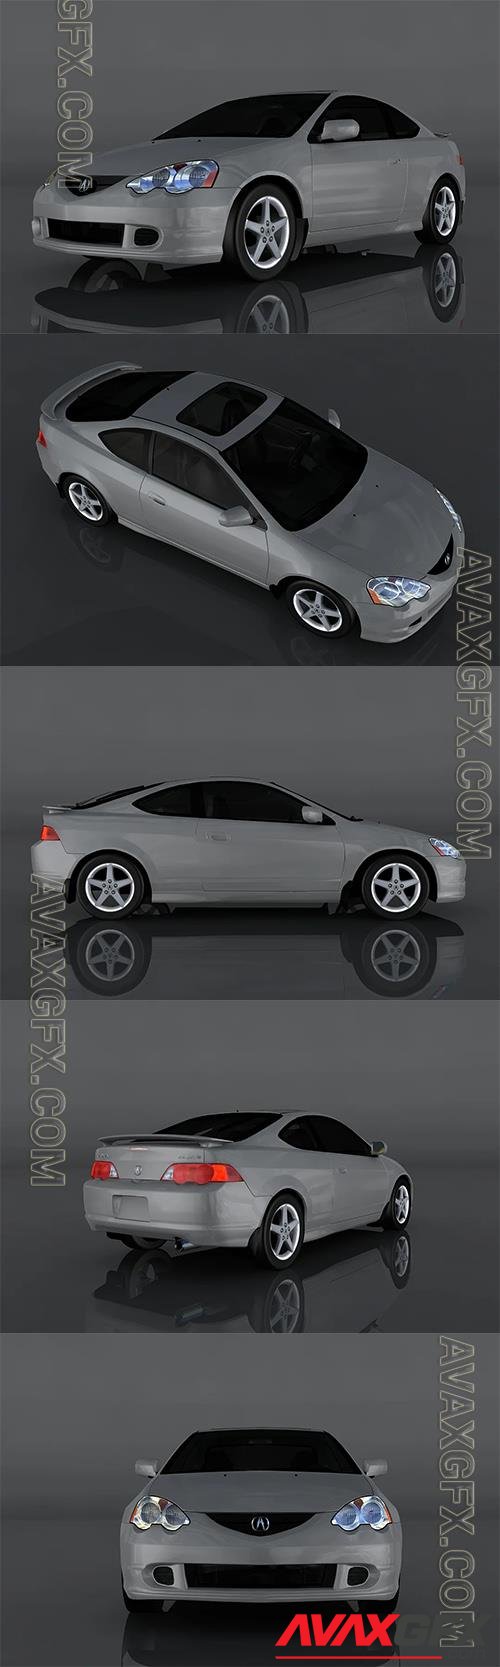 2001 Acura RSX Type-S 3d model Model o175643